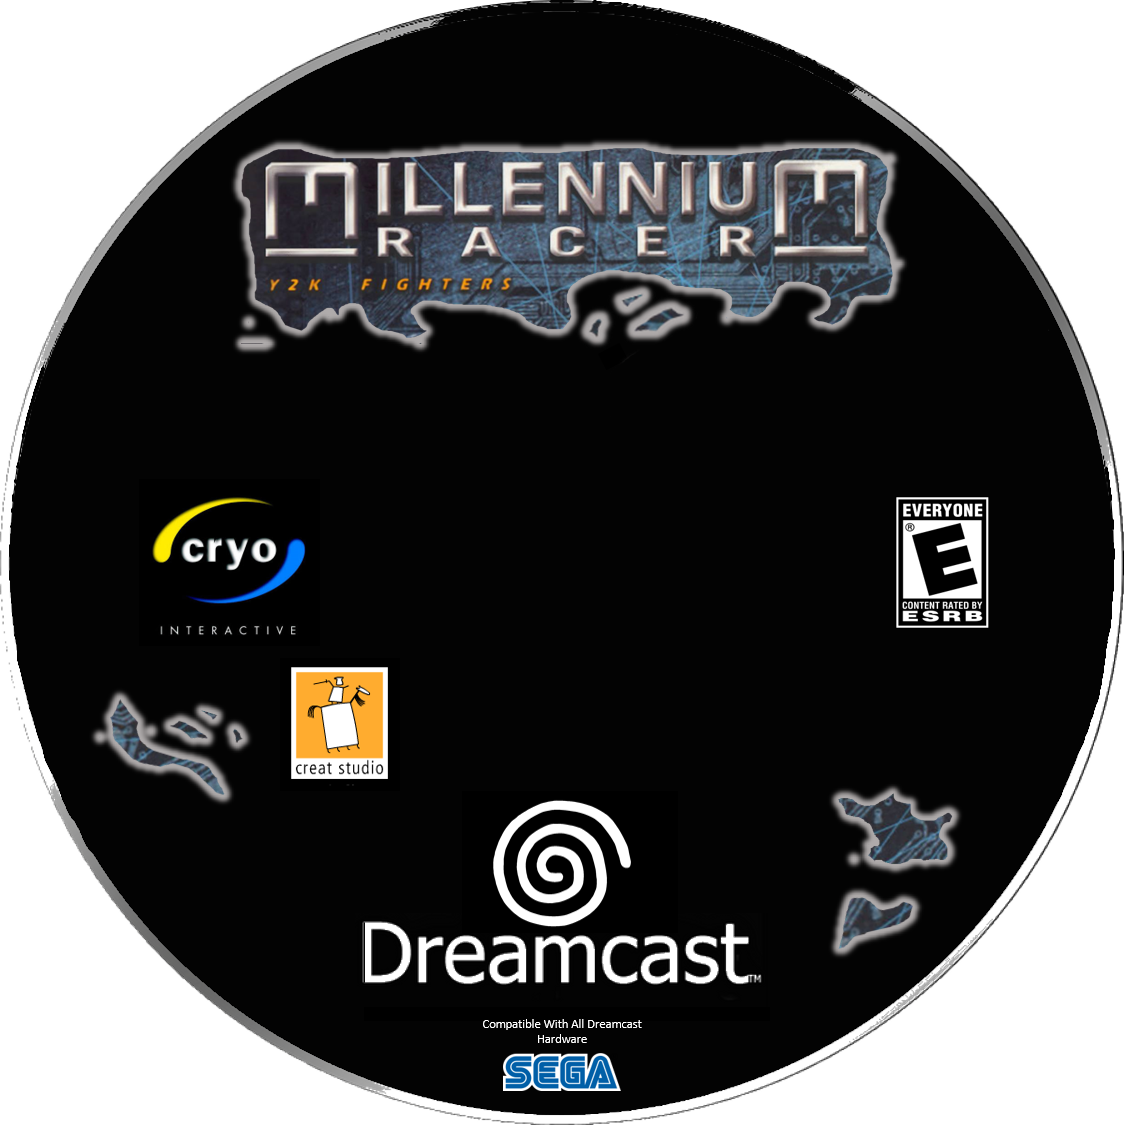 Millennium Racer: Y2K Fighters Disc (Sega Dreamcast PAL)